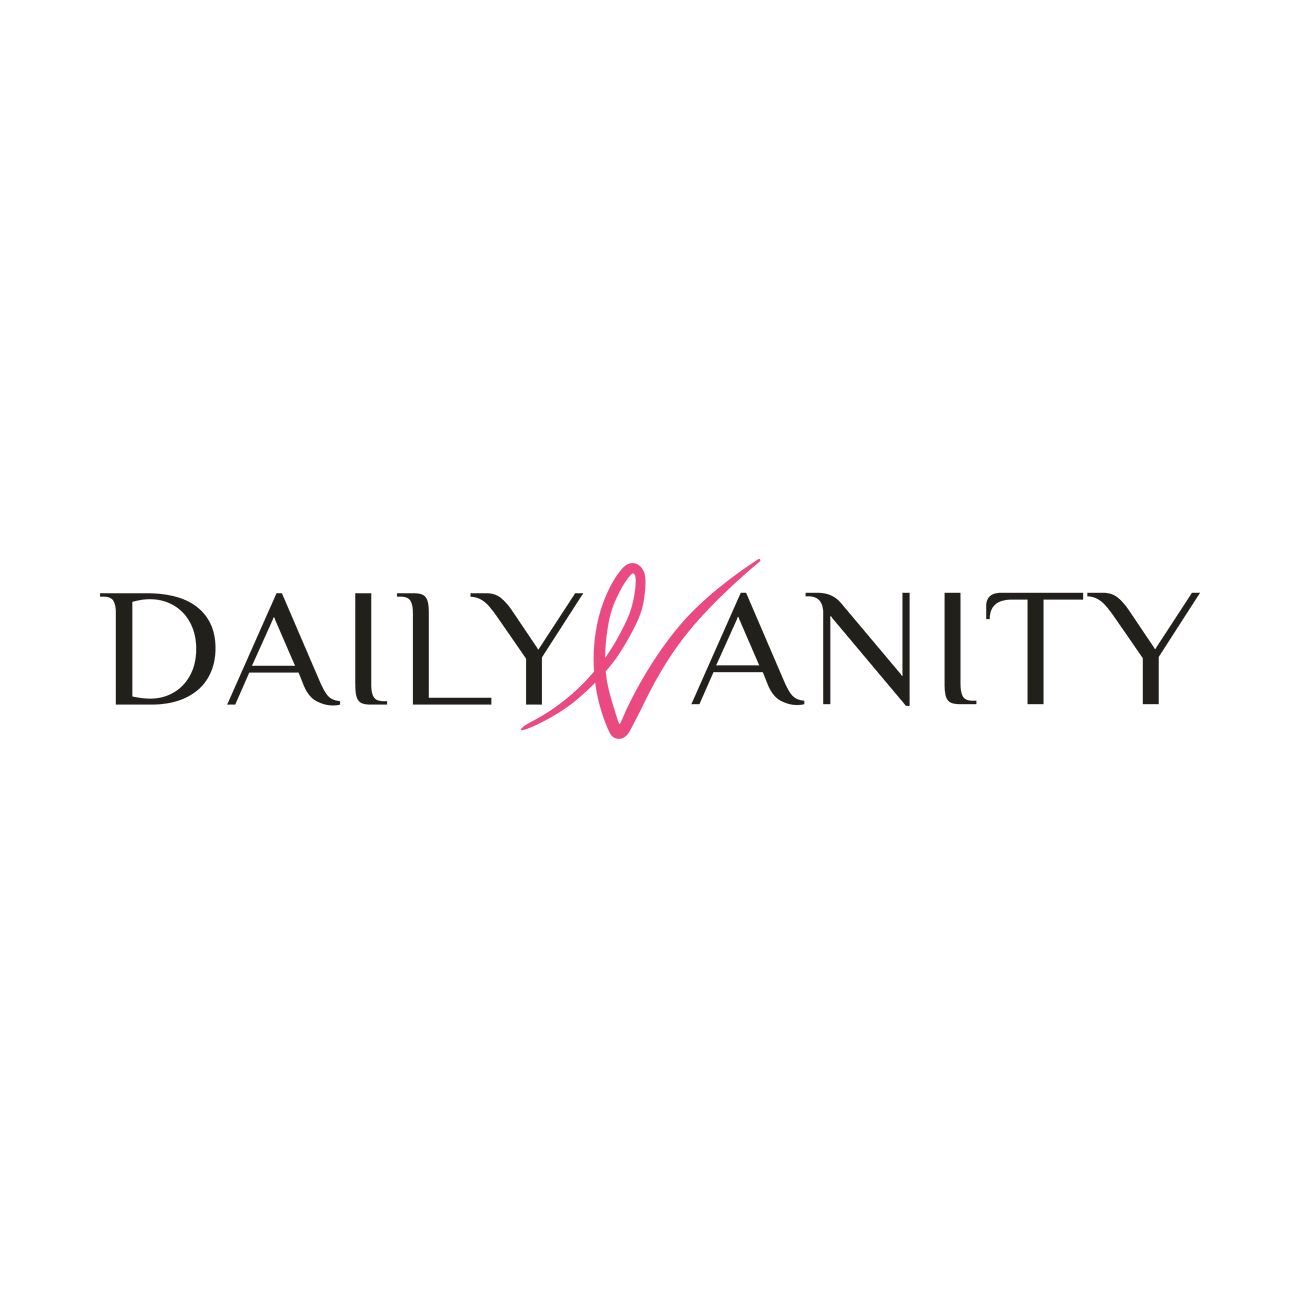 Daily Vanity Pte Ltd